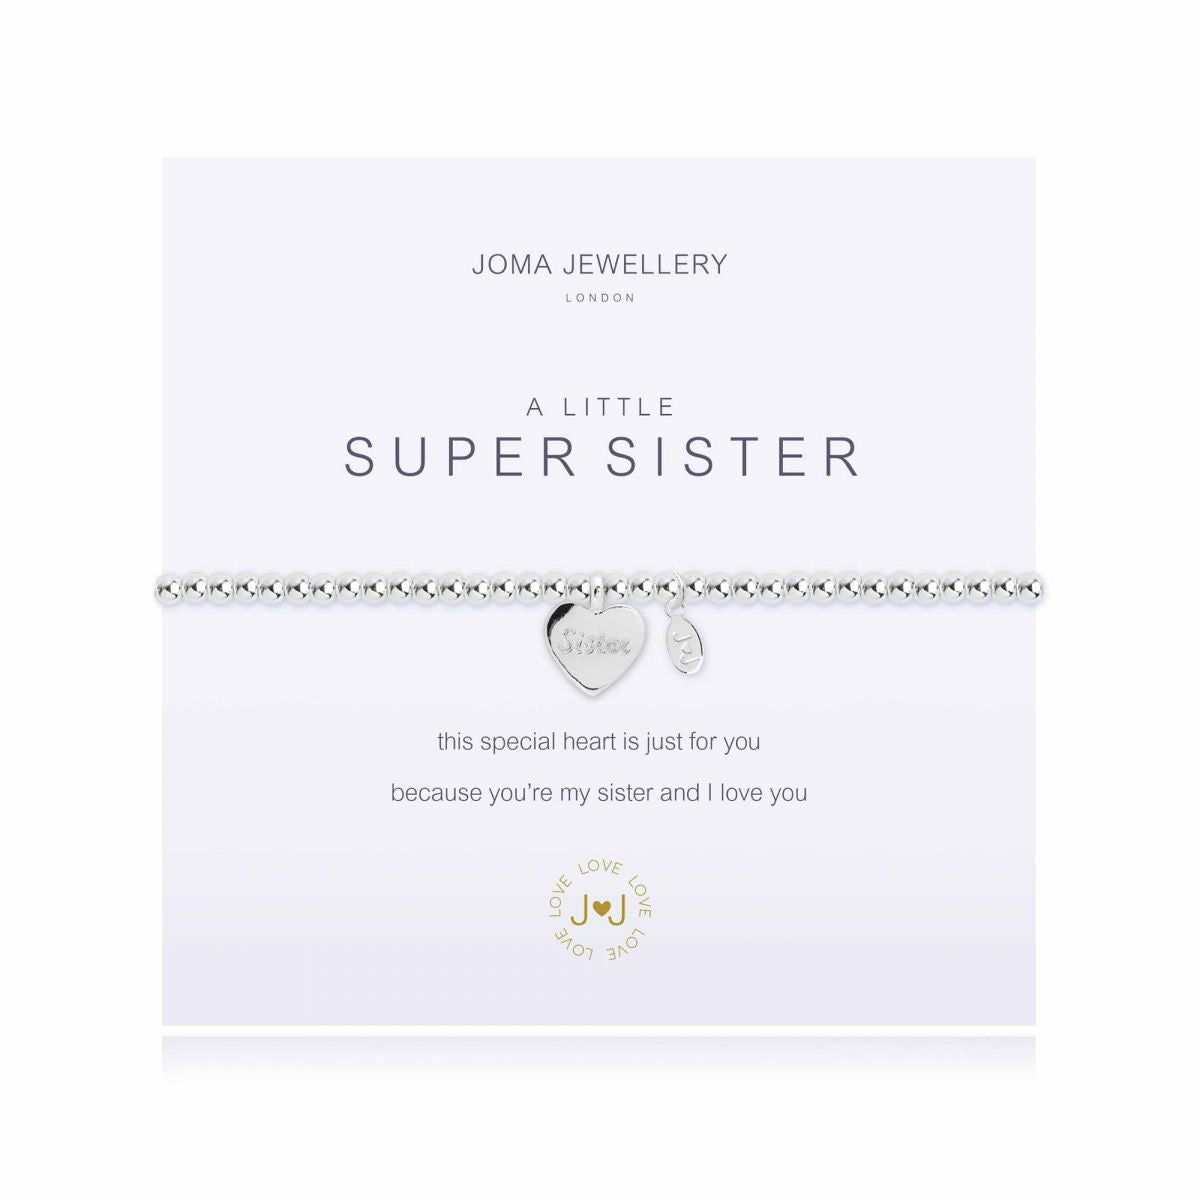 Joma Jewellery 'A Little' Super Sister